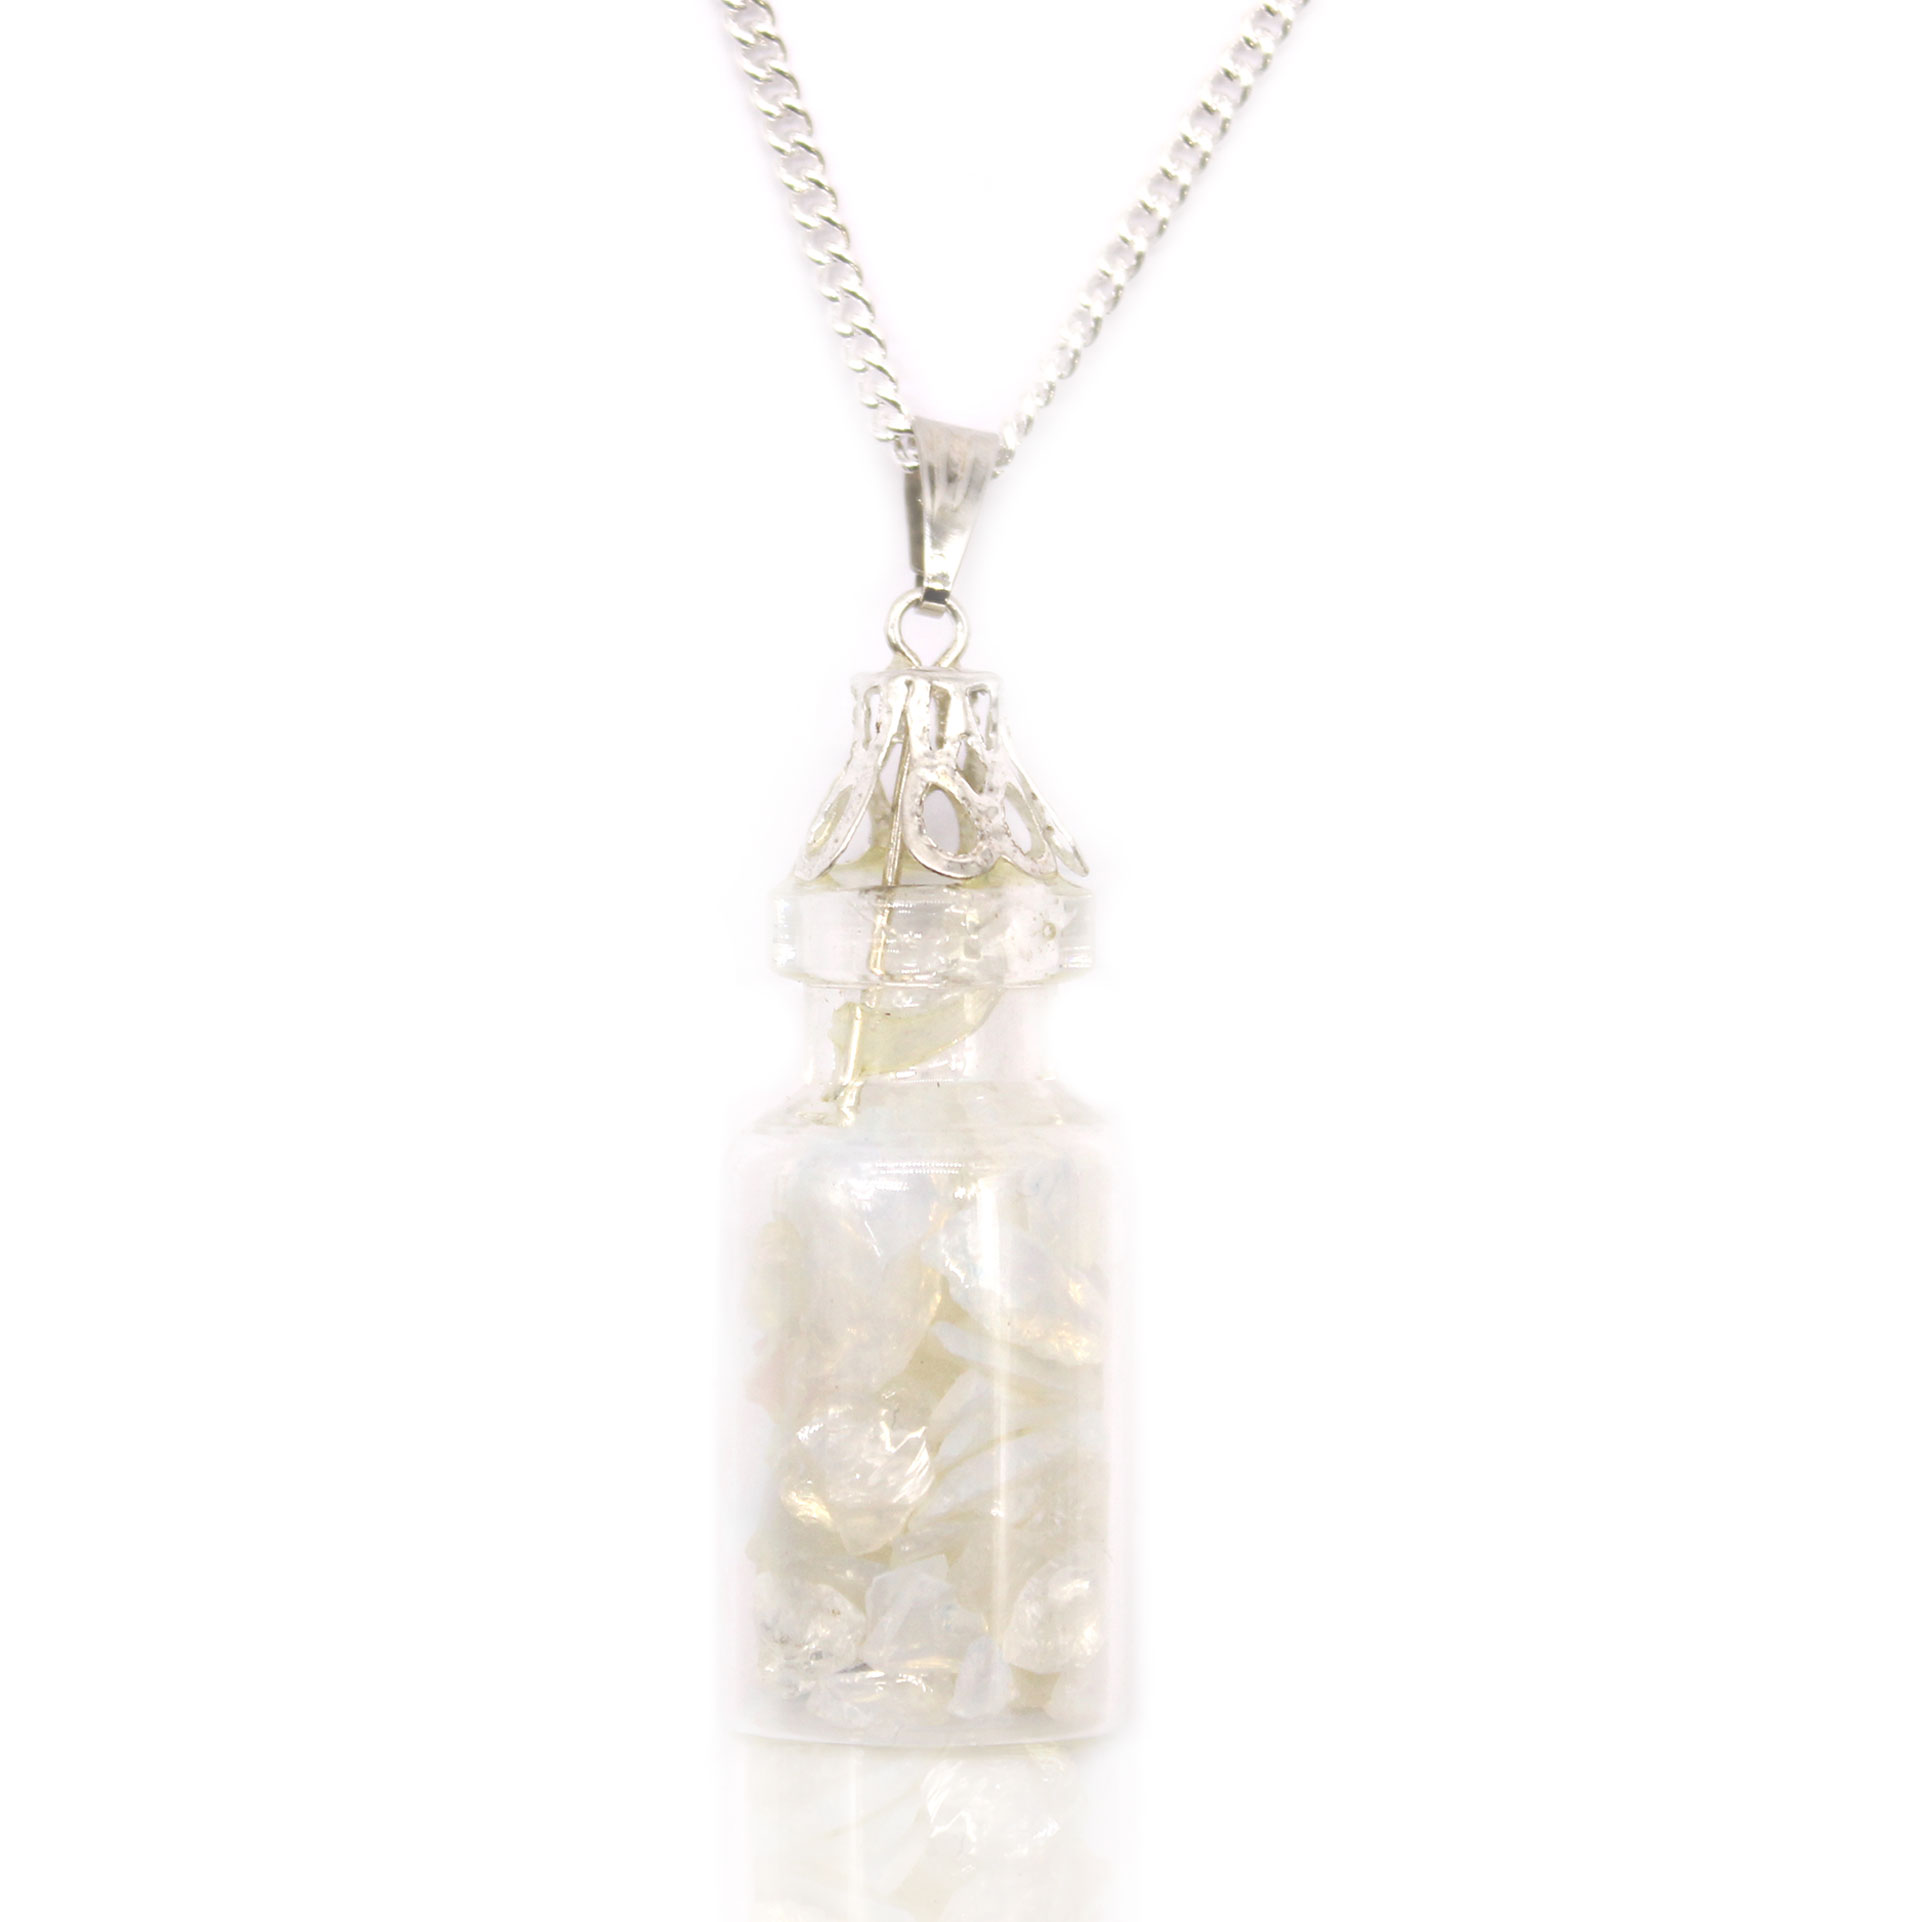 Bottled Gemstones Necklace - Opalite - Click Image to Close